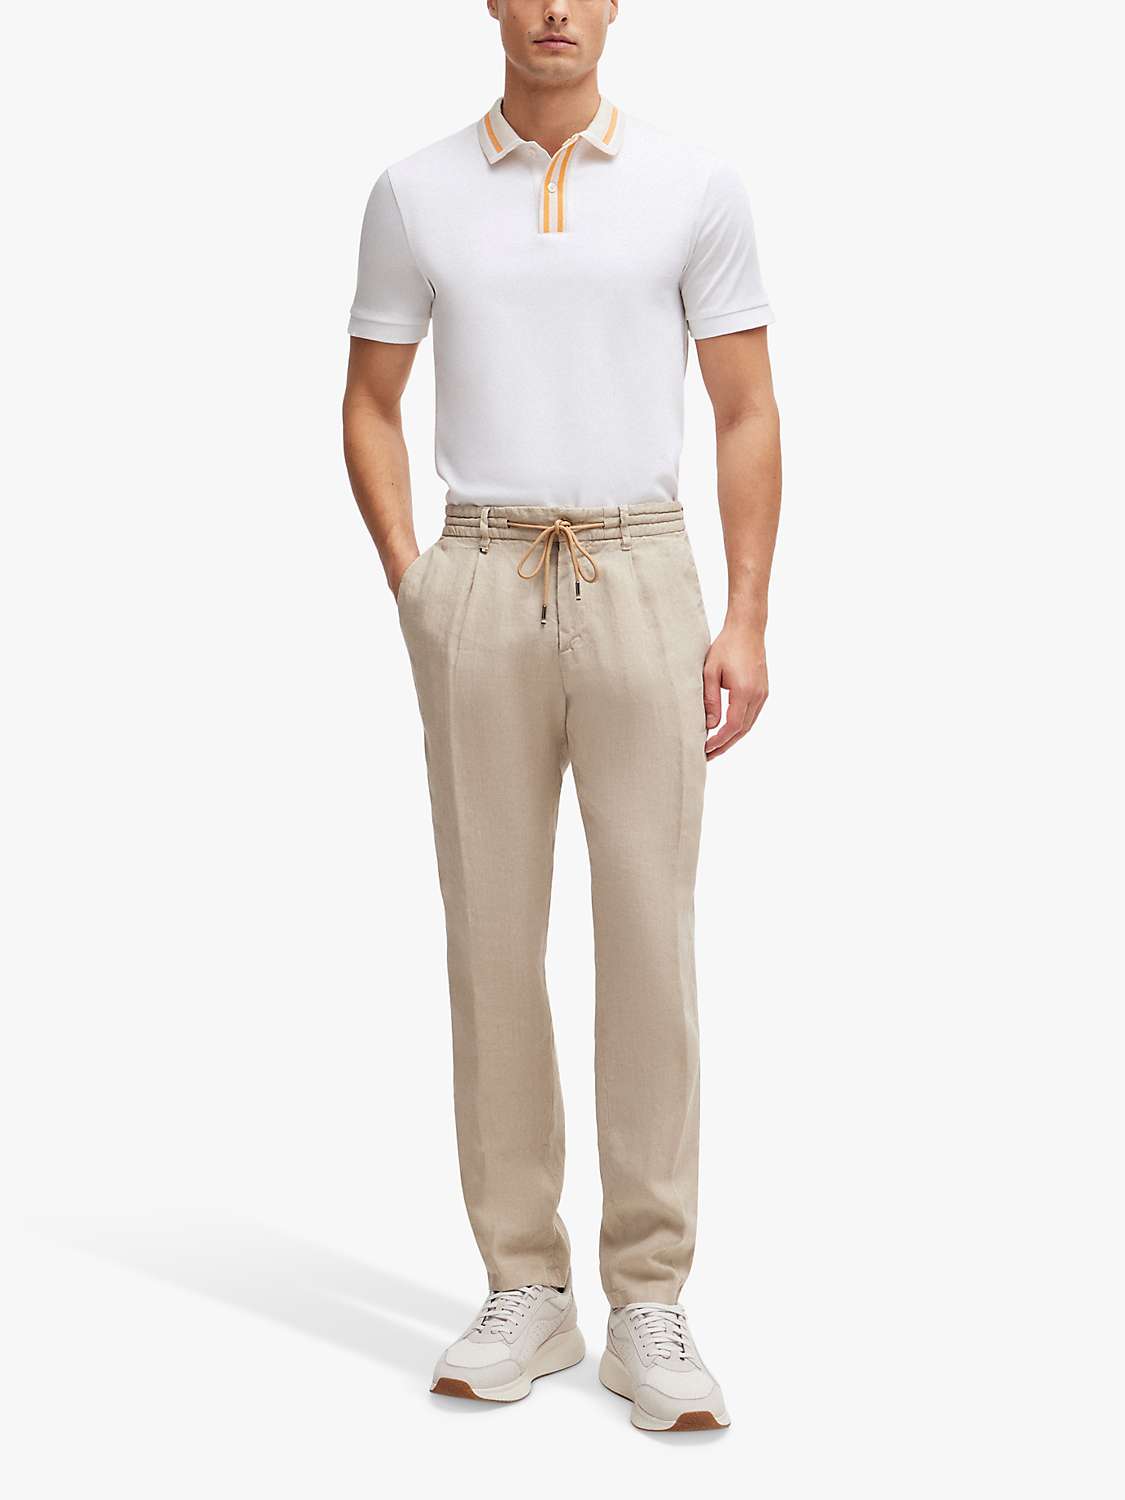 Buy BOSS Phillipson 36 Slim Fit Polo Shirt, White/Orange Online at johnlewis.com